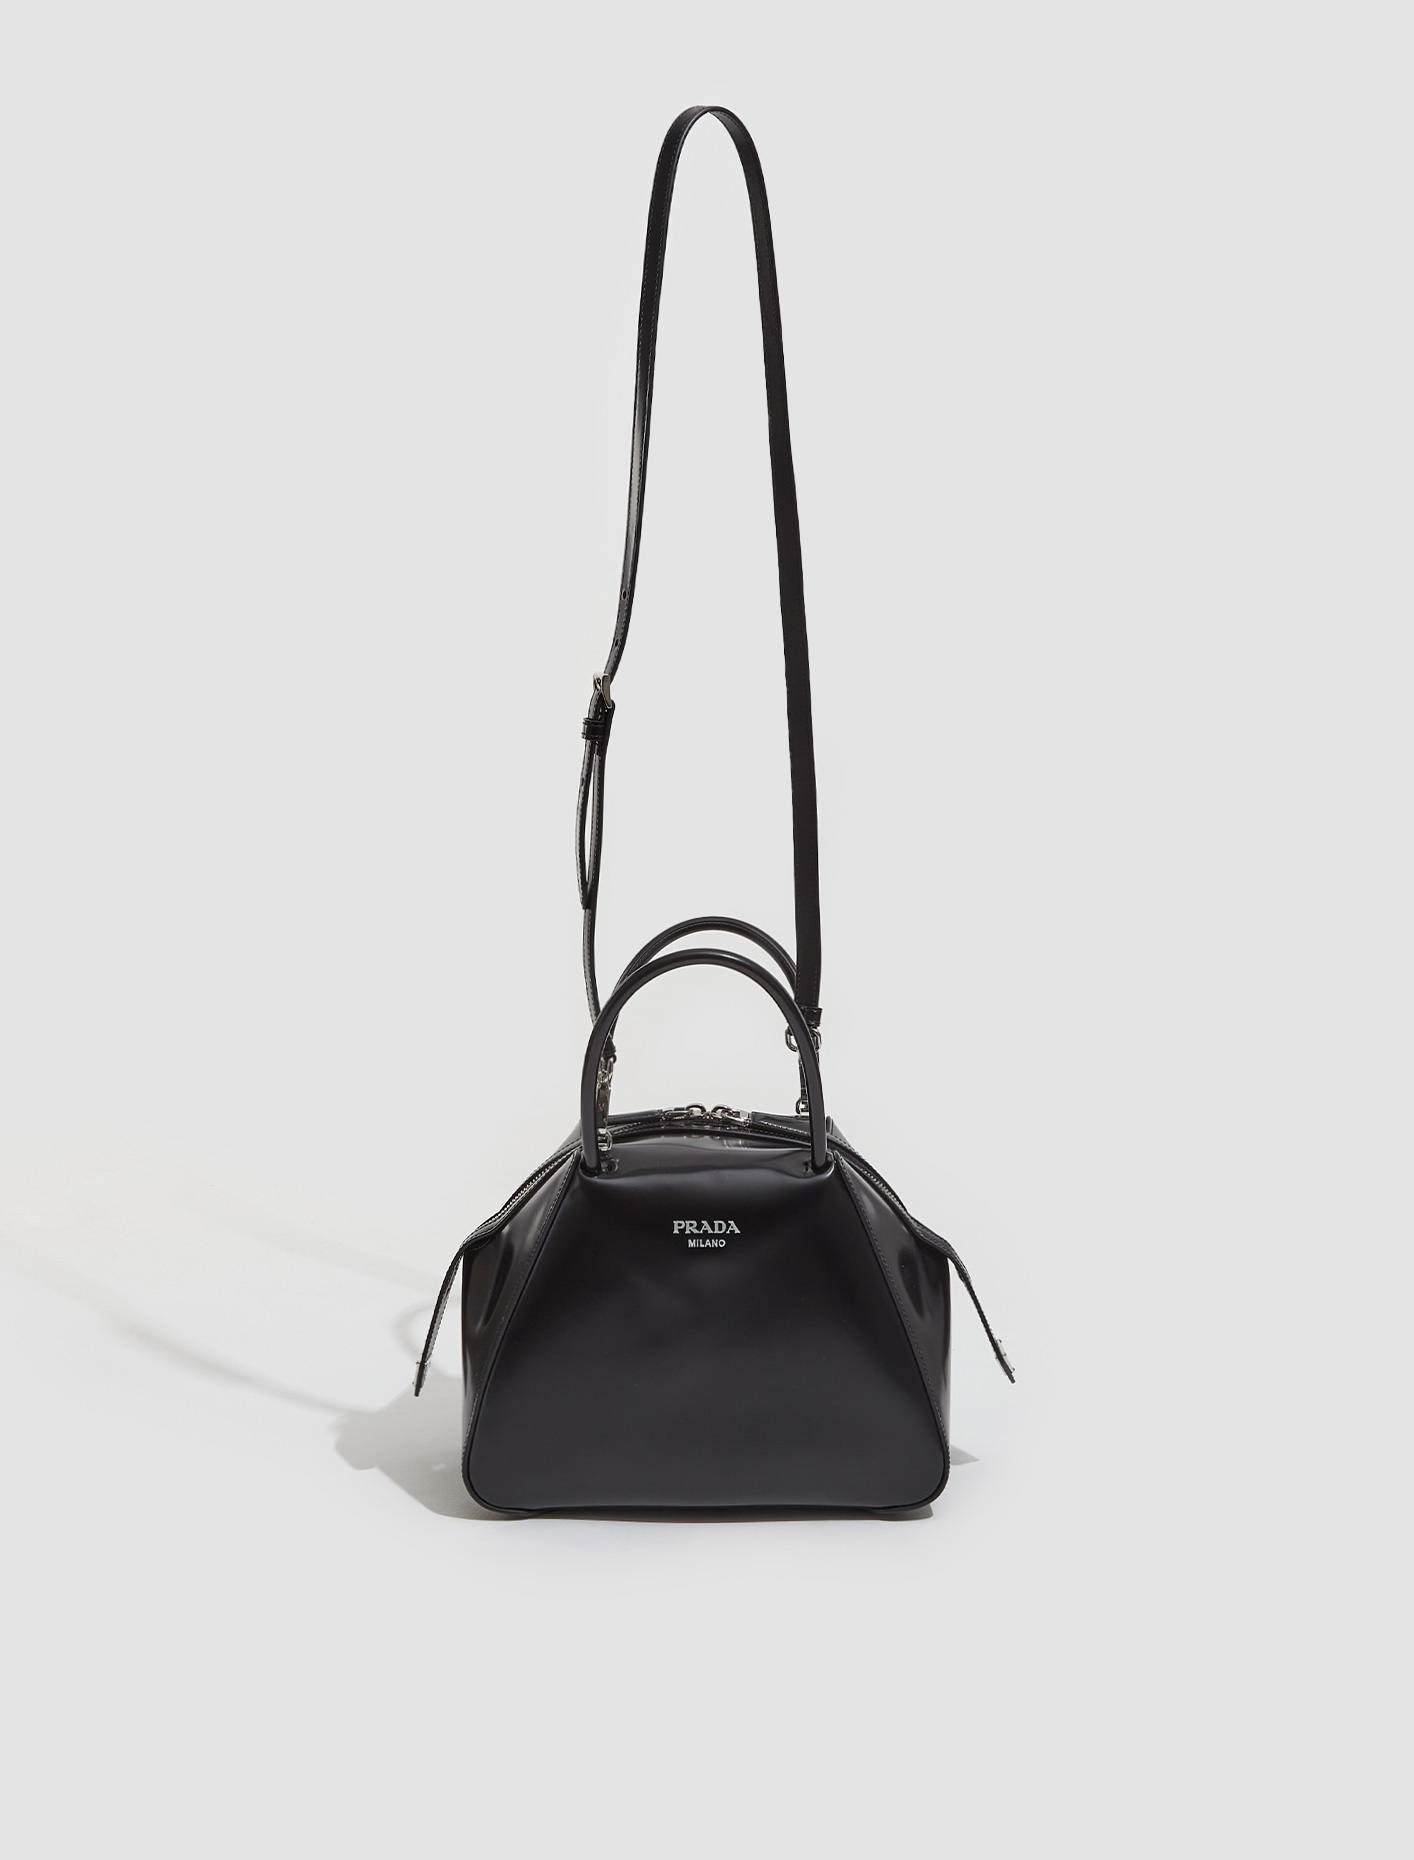 Prada Small Brushed Leather Prada Supernova Handbag in Black | Voo Store  Berlin | Worldwide Shipping